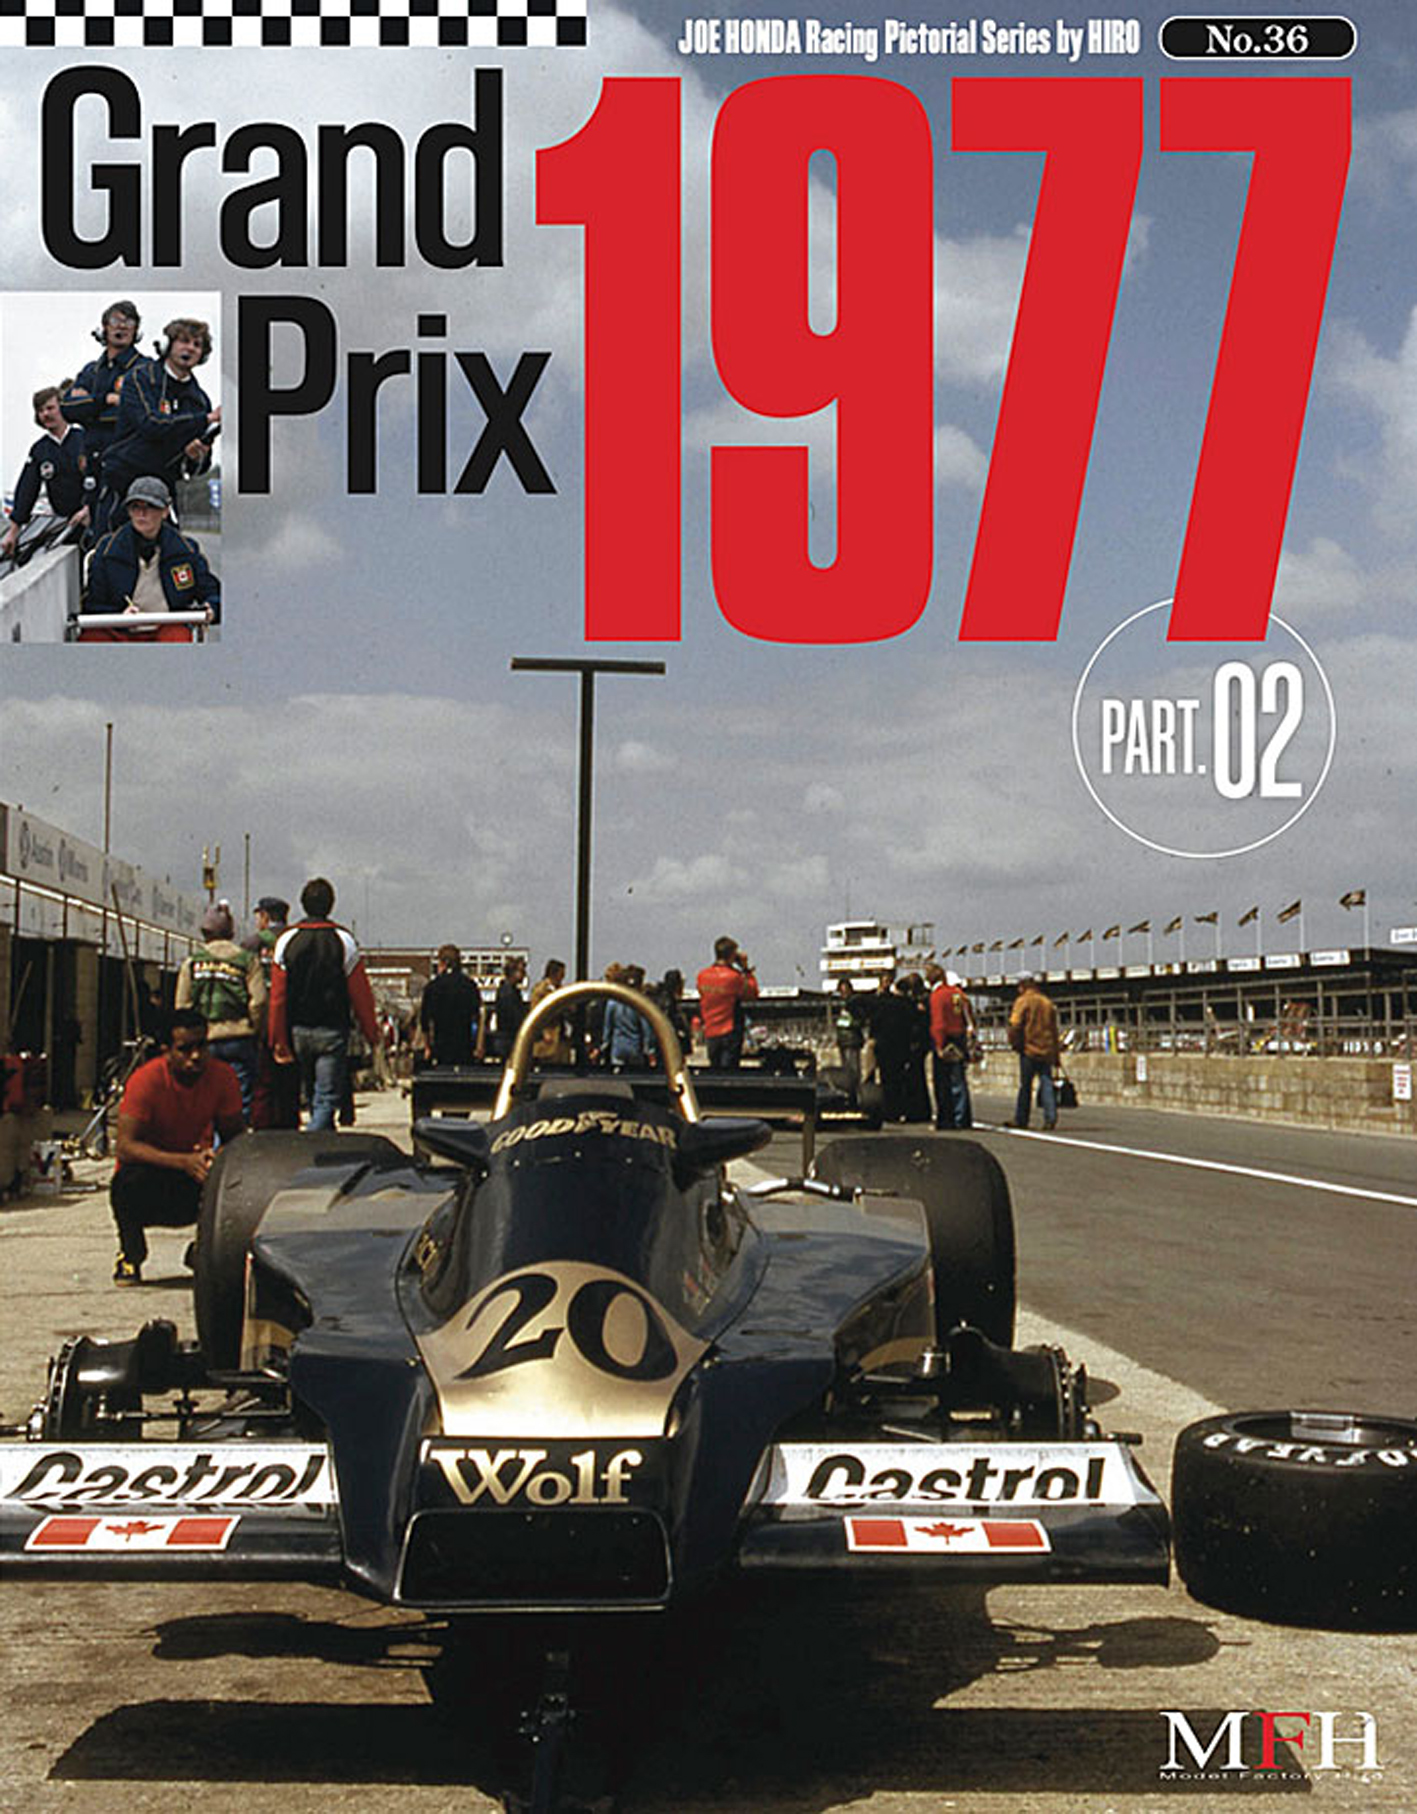 ■ JOE HONDA Racing Pictorial Series by HIRO No.36: Grand Prix 1977 Part 02....